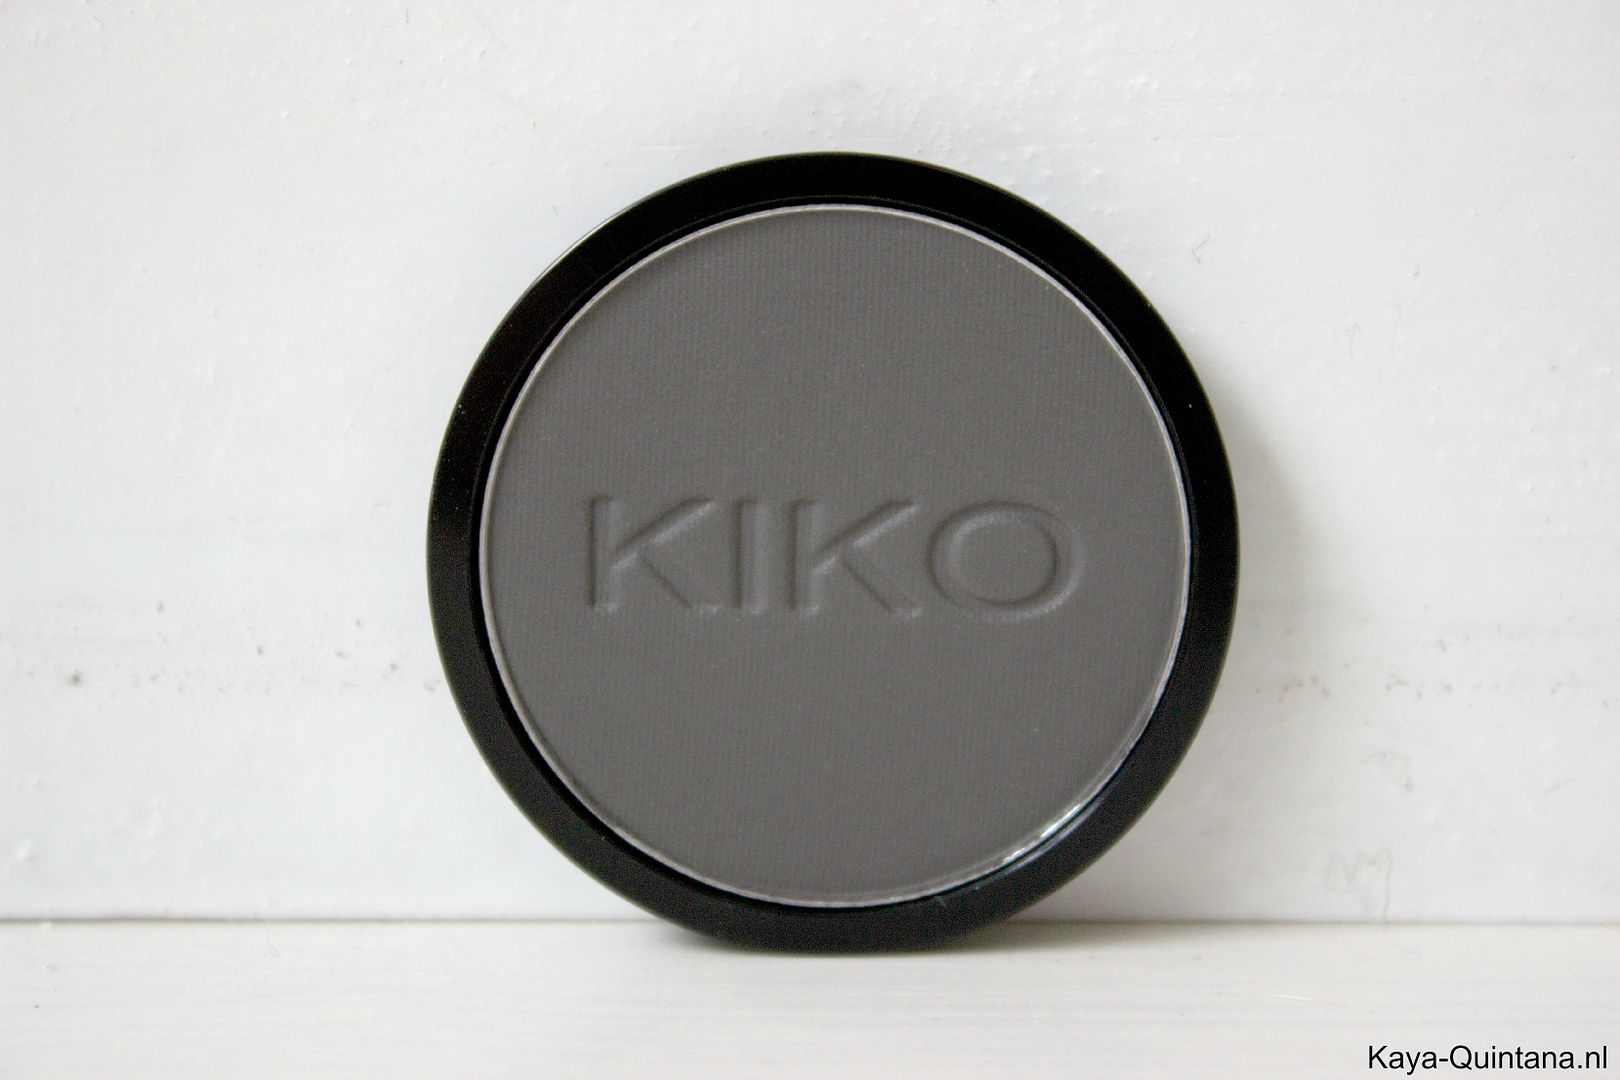 kiko eyeshadow 289 mat dark oak